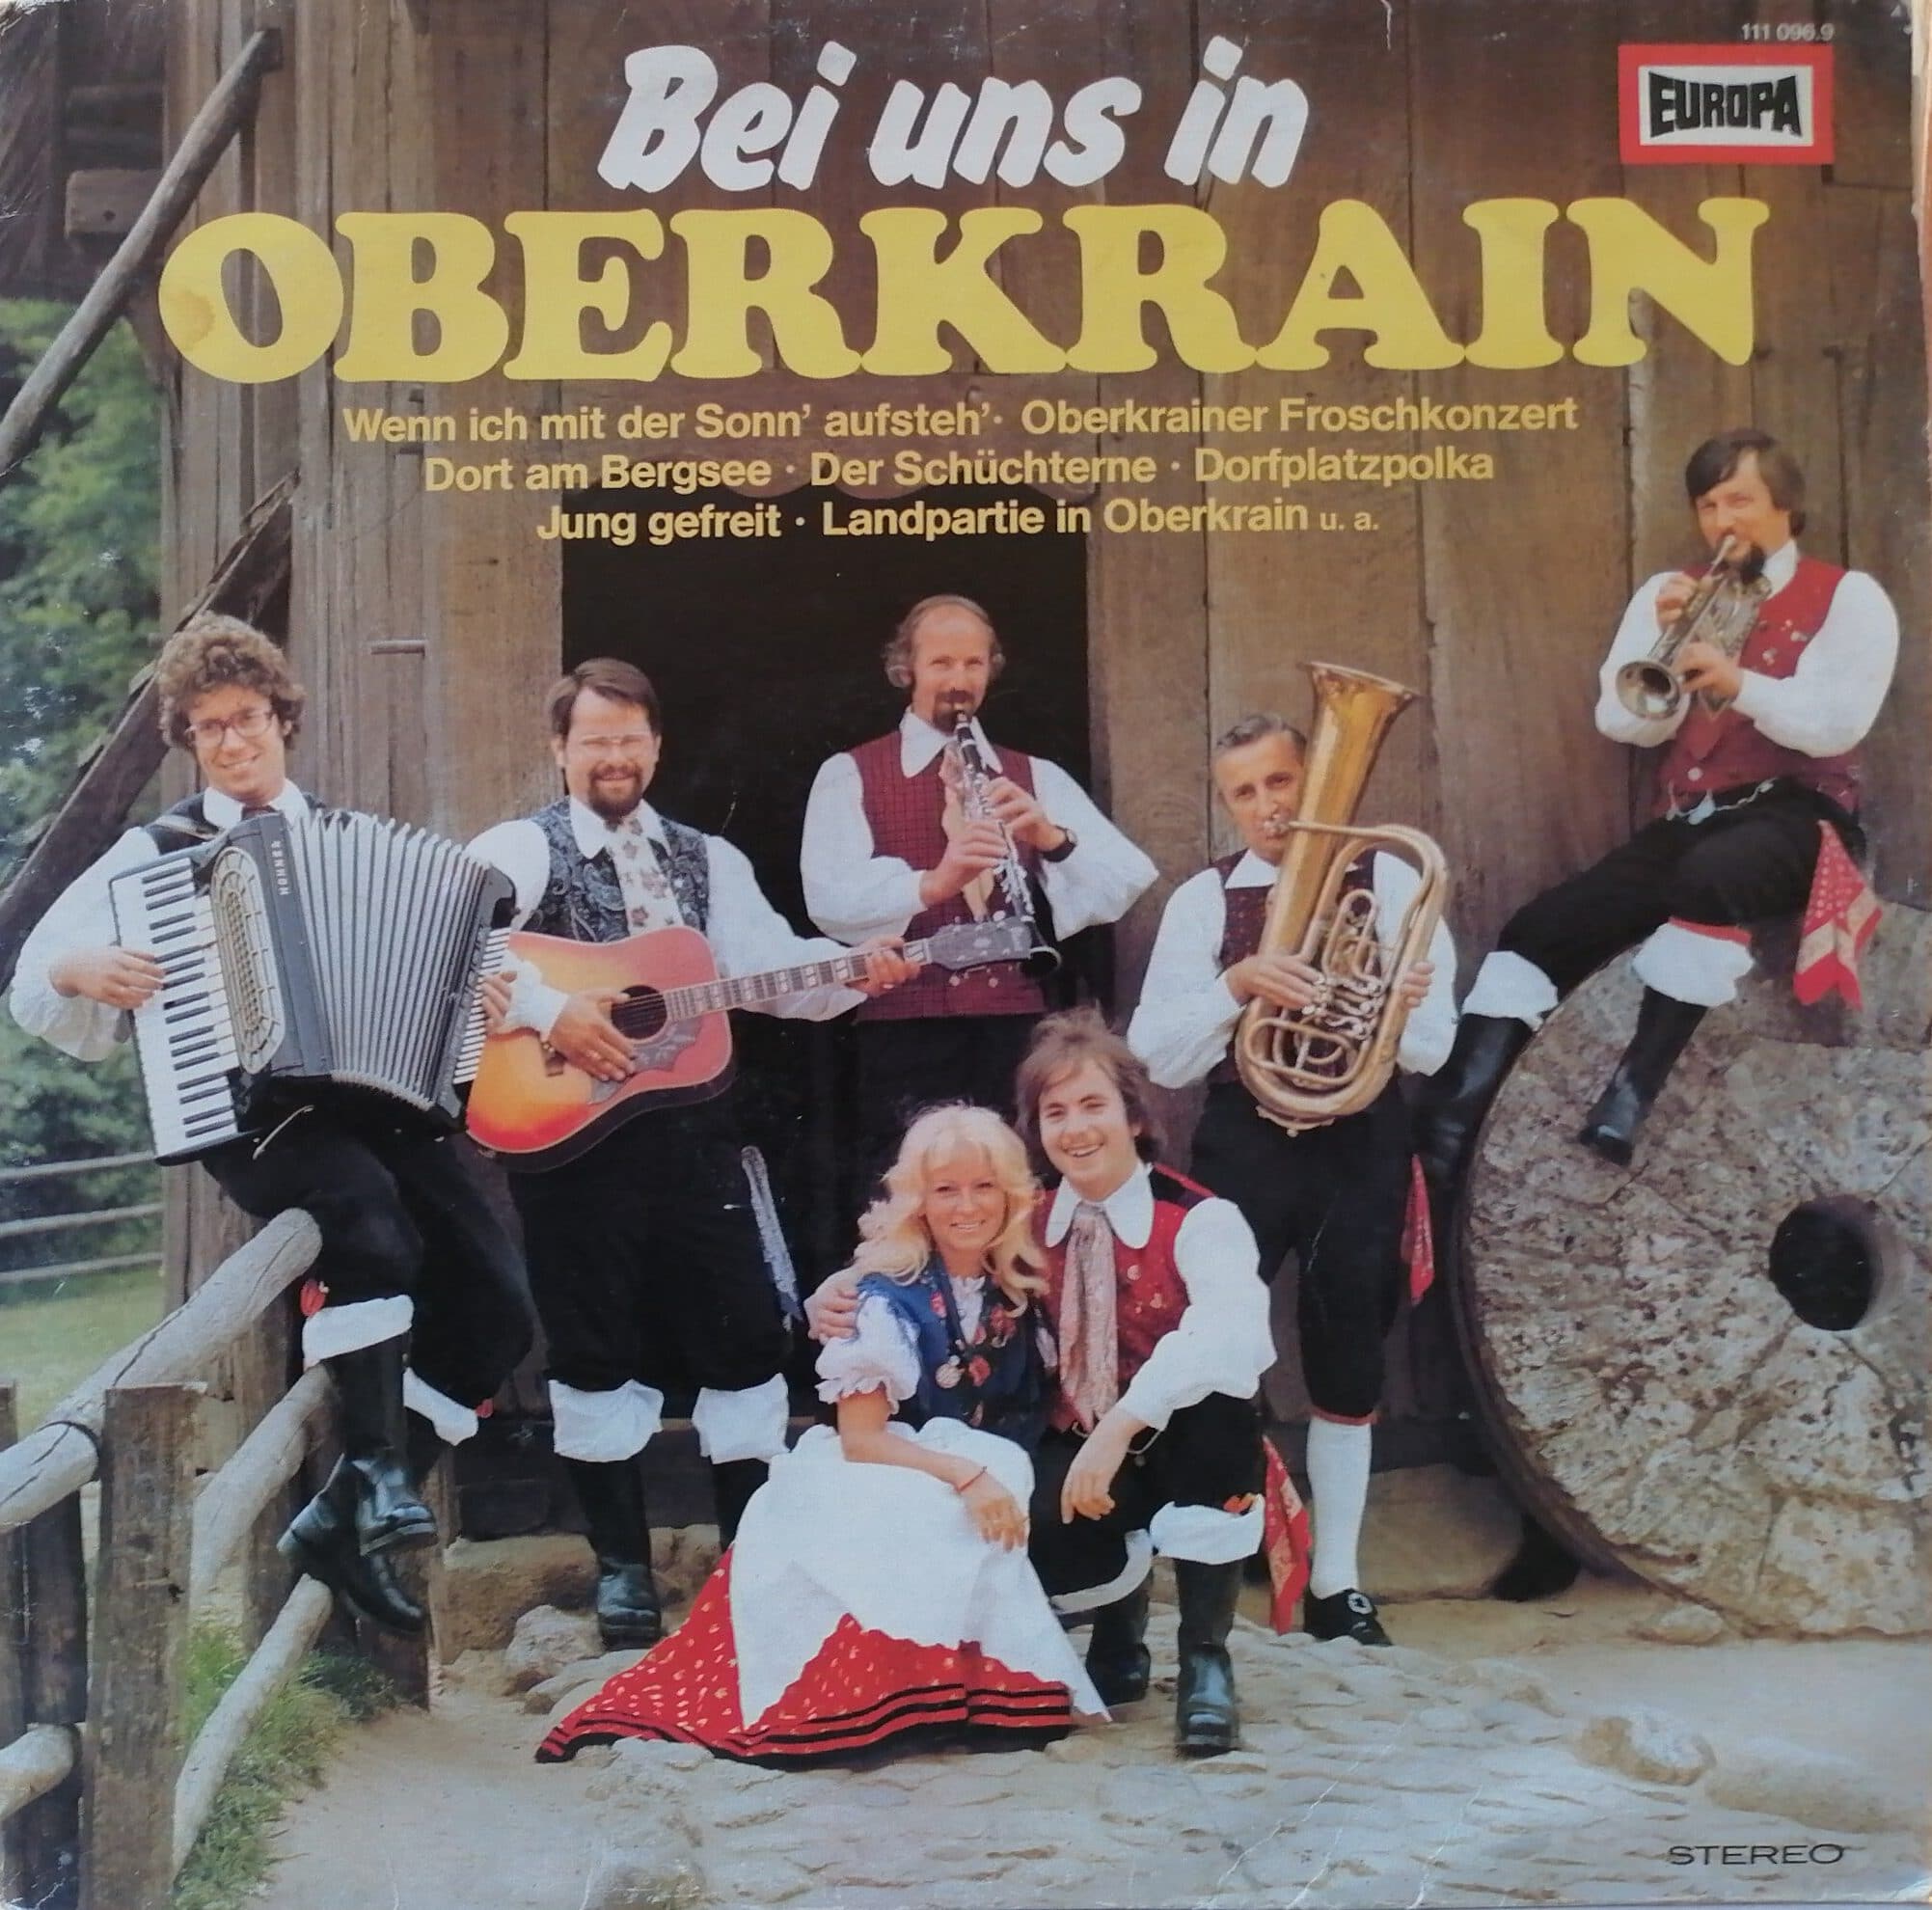 Gramofonska ploča Die Lustigen Oberkrainer Bei Uns In Oberkrain 111 096.9